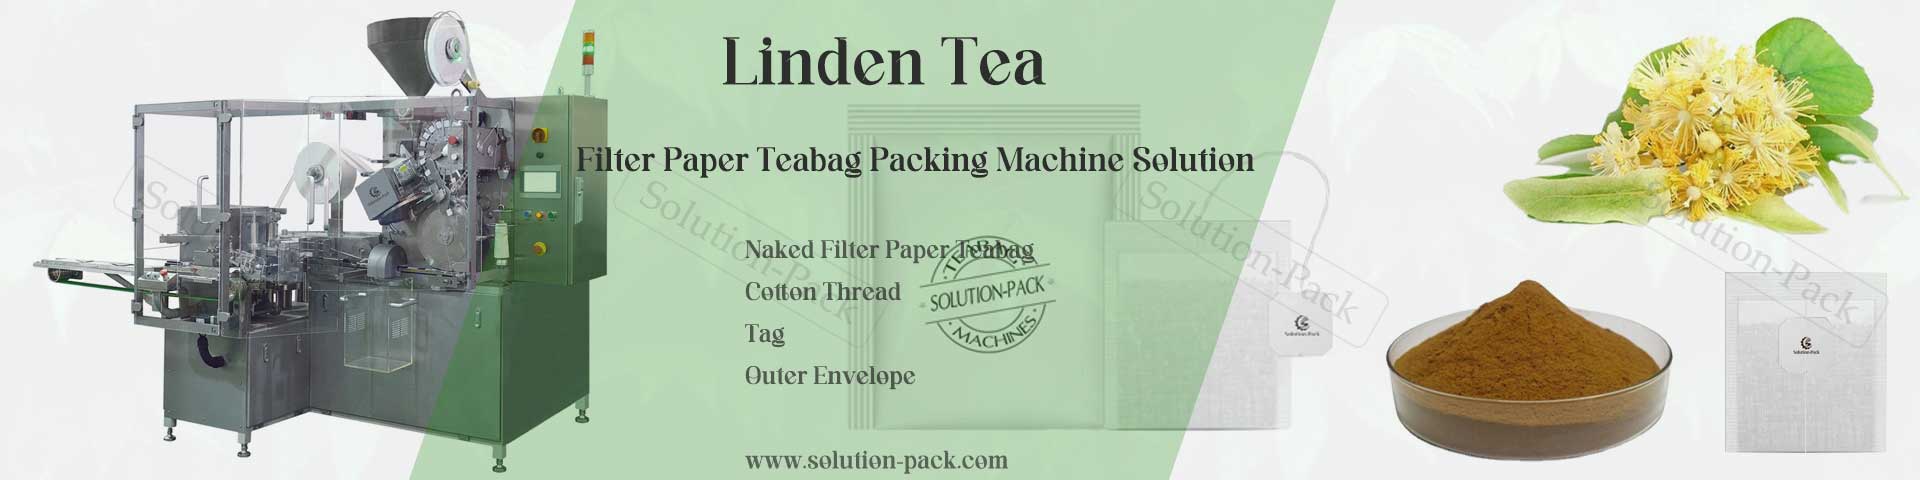 Linden Tea | Filter Paper Teabag Packing Machine | Pyramid Teabag Packing Machine | Linden Tea Packing Machine | Solution-Pack